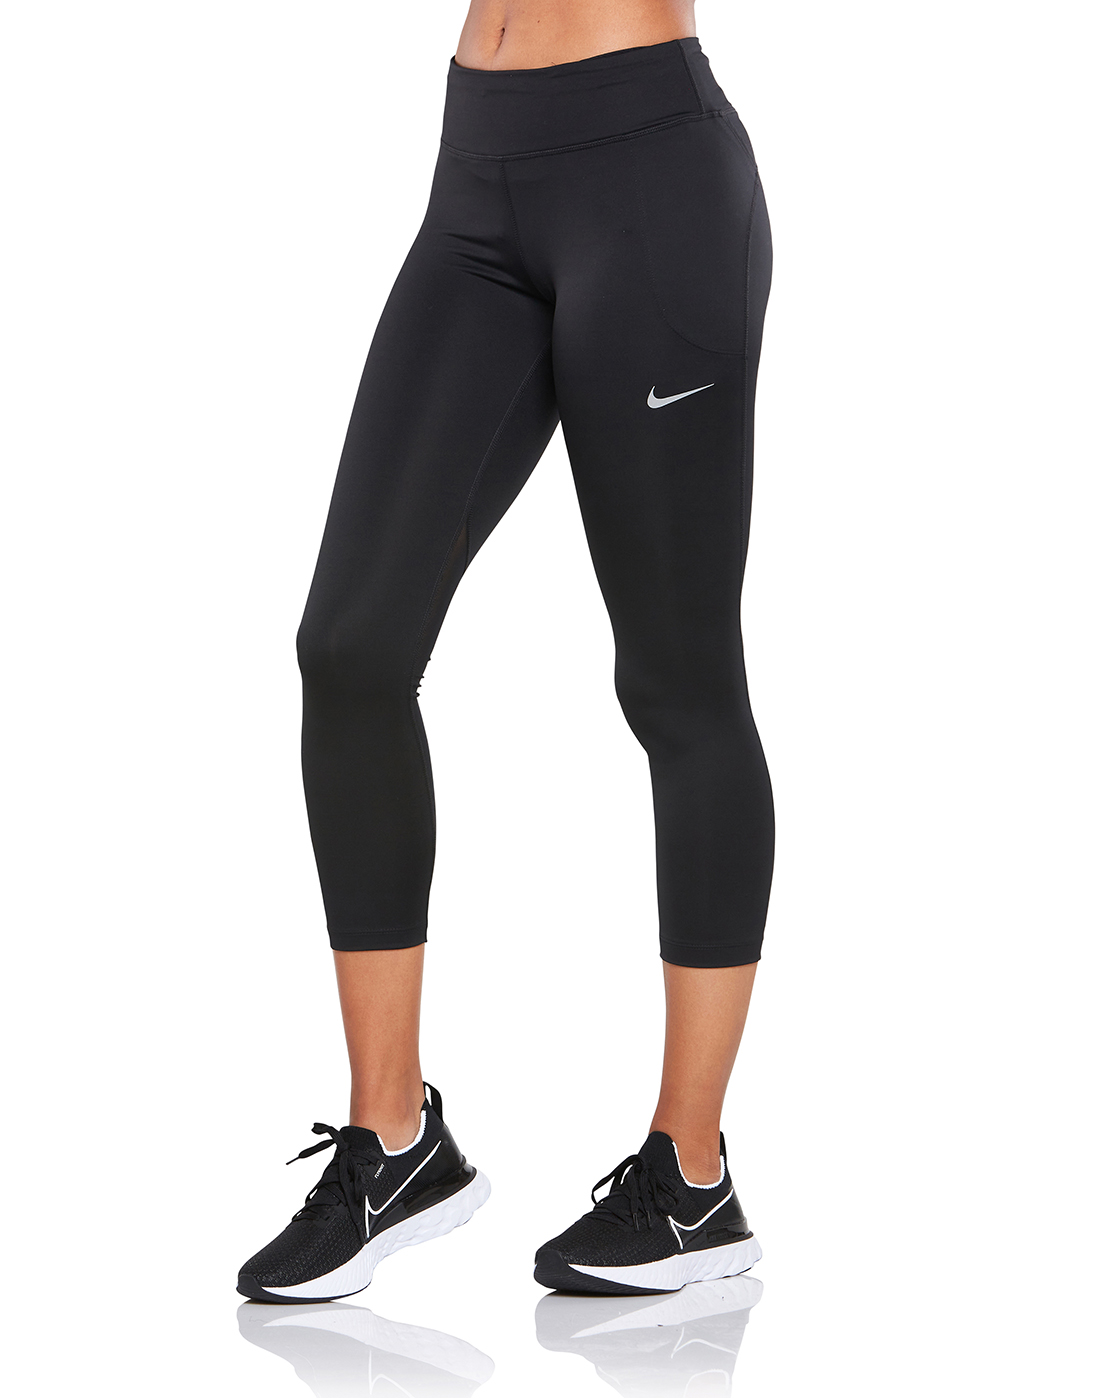 Nike Womens Fast Crop Leggings - Black | Life Style Sports IE